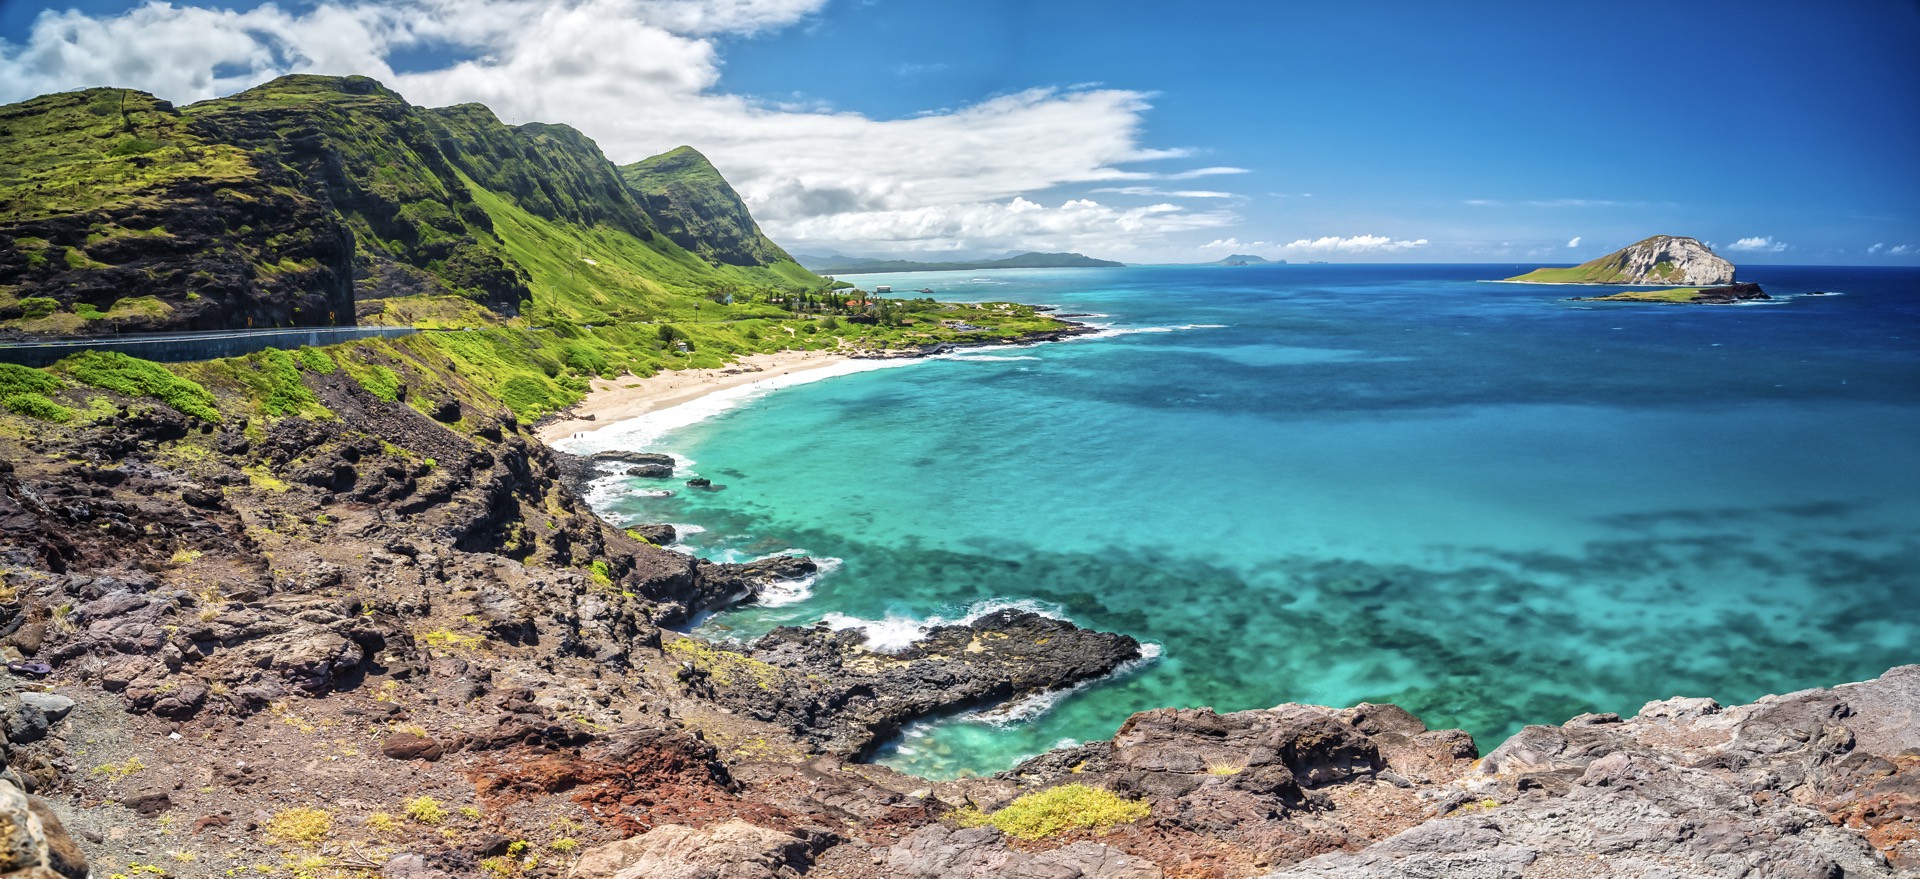 Makapuu Beach: The Golden-haired Beauty Of Hawaii - Grand Tour